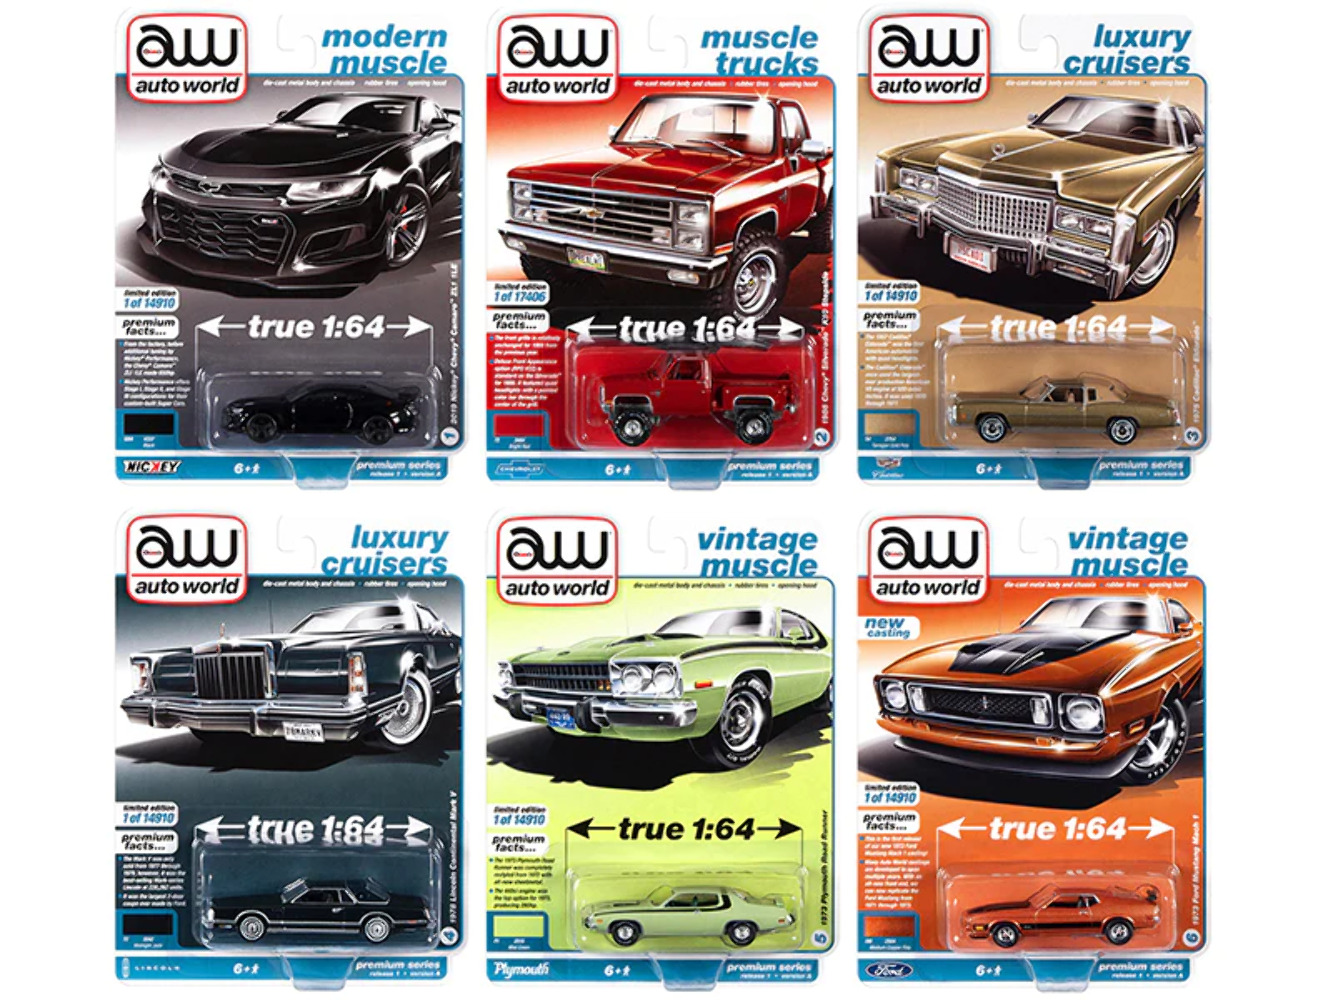 Auto World Premium 2022 Set A of 6 pieces Release 1 1/64 Diecast Model Cars